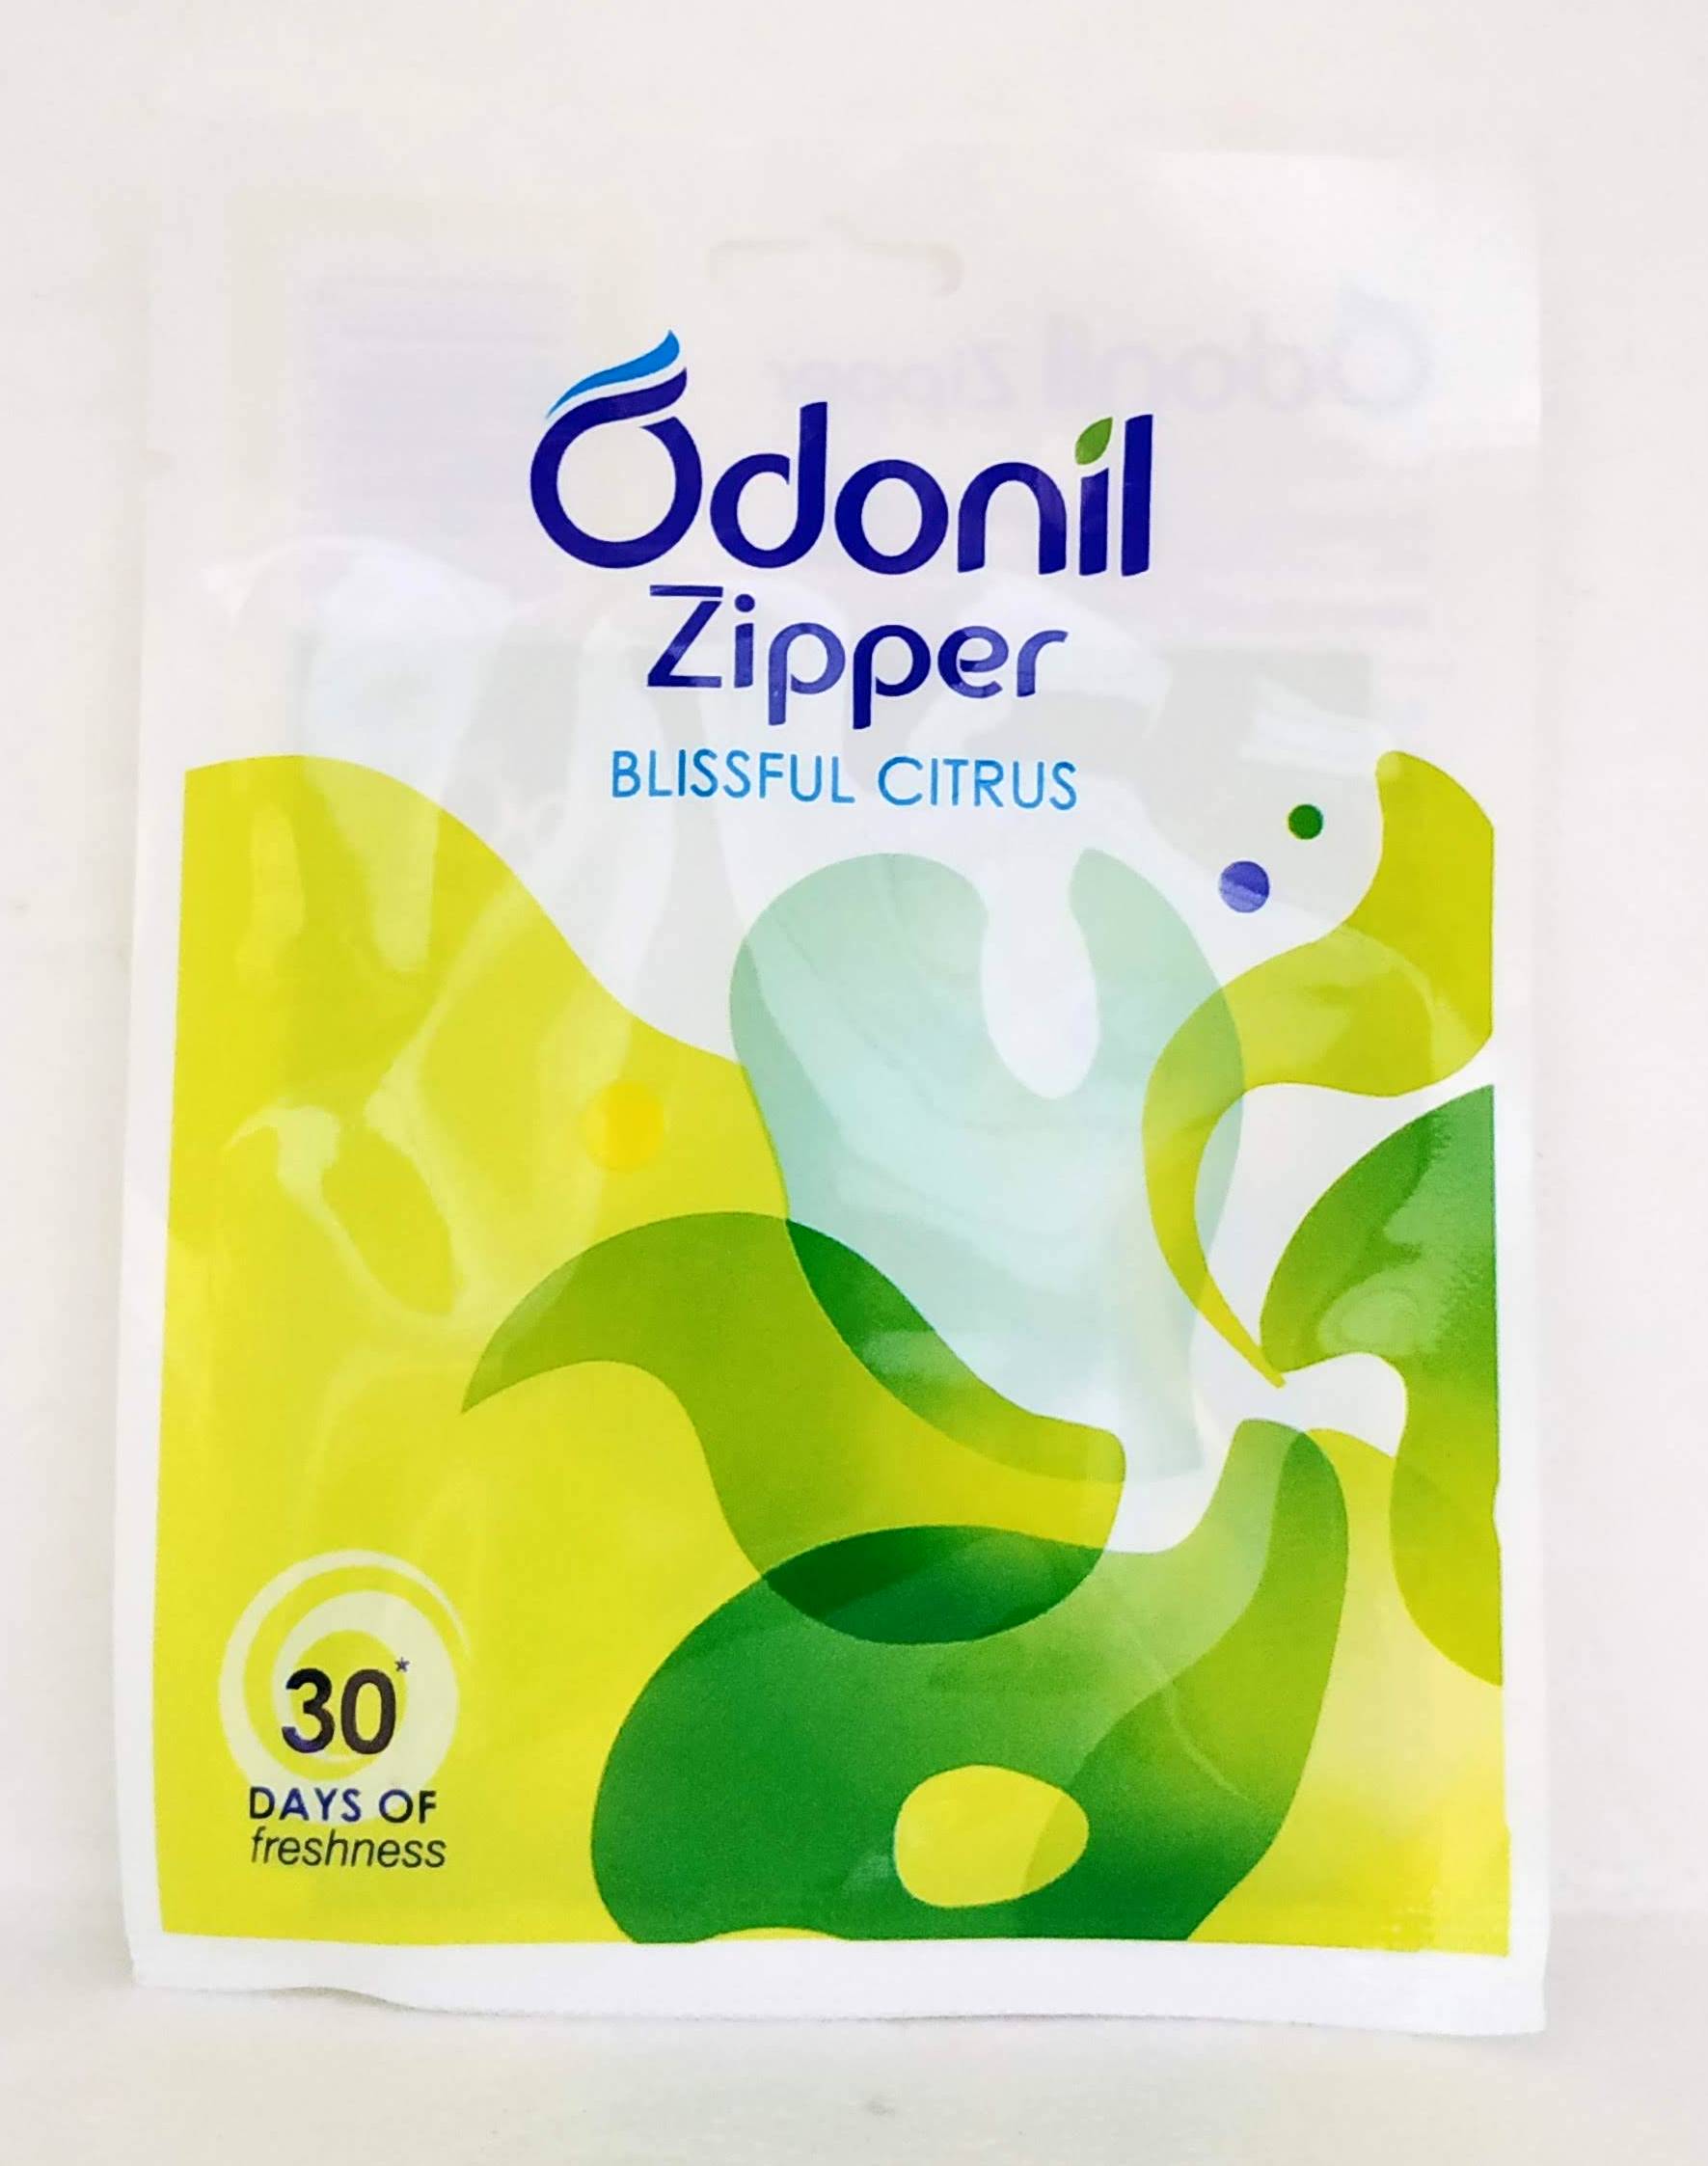 Shop Odonil Zipper - Blissful Citrus at price 55.00 from Dabur Online - Ayush Care